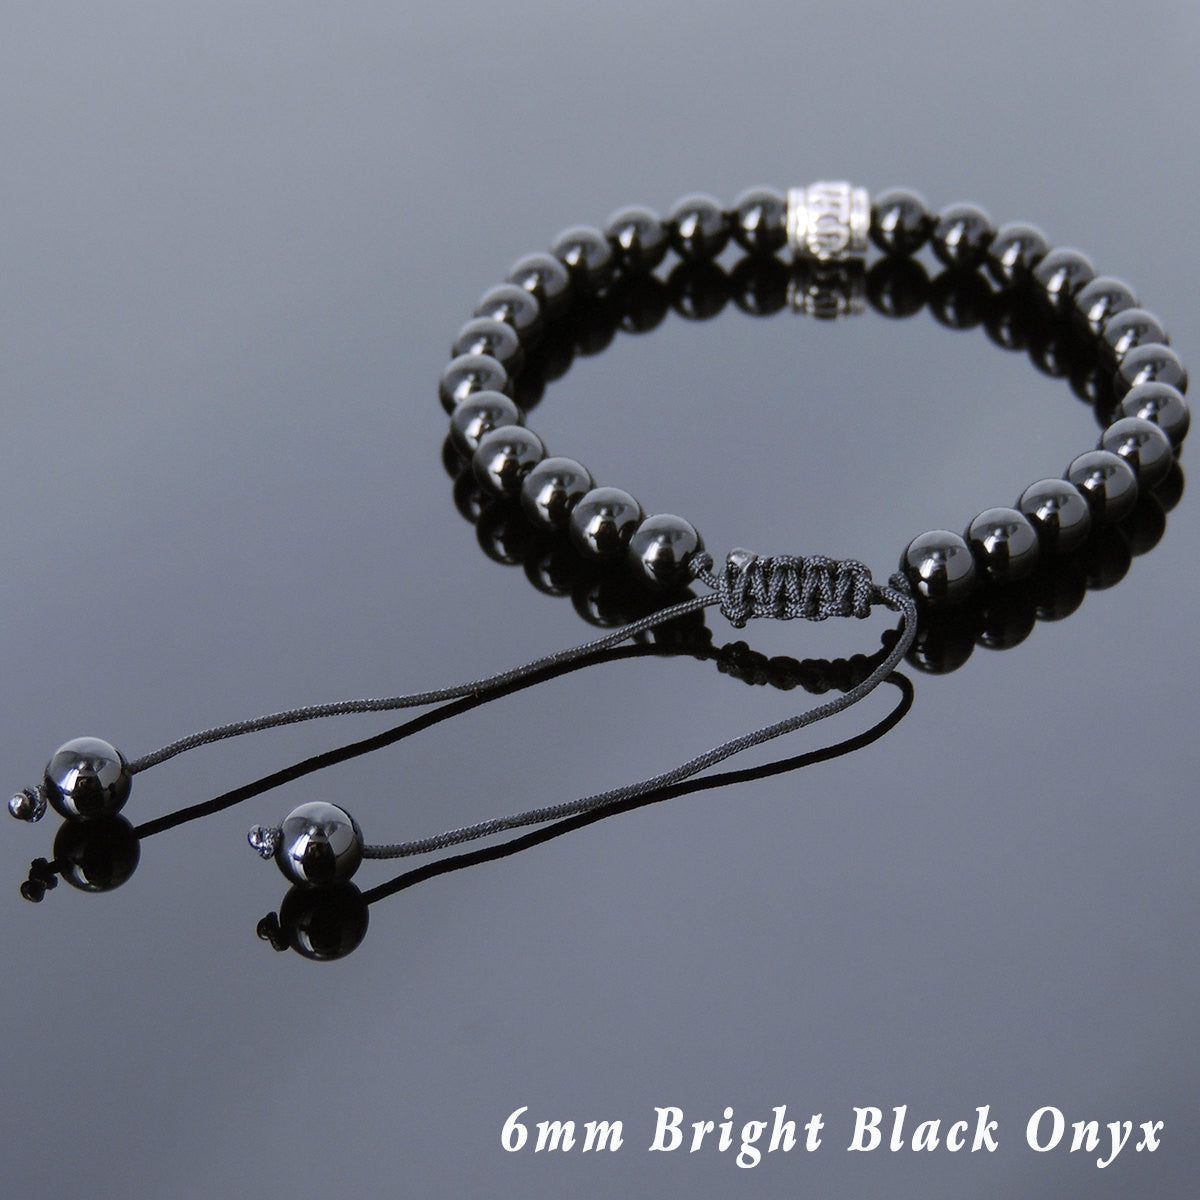 6mm Bright Black Onyx Adjustable Braided Bracelet with S925 Sterling Silver OM Meditation Cylinder Bead - Handmade by Gem & Silver BR818